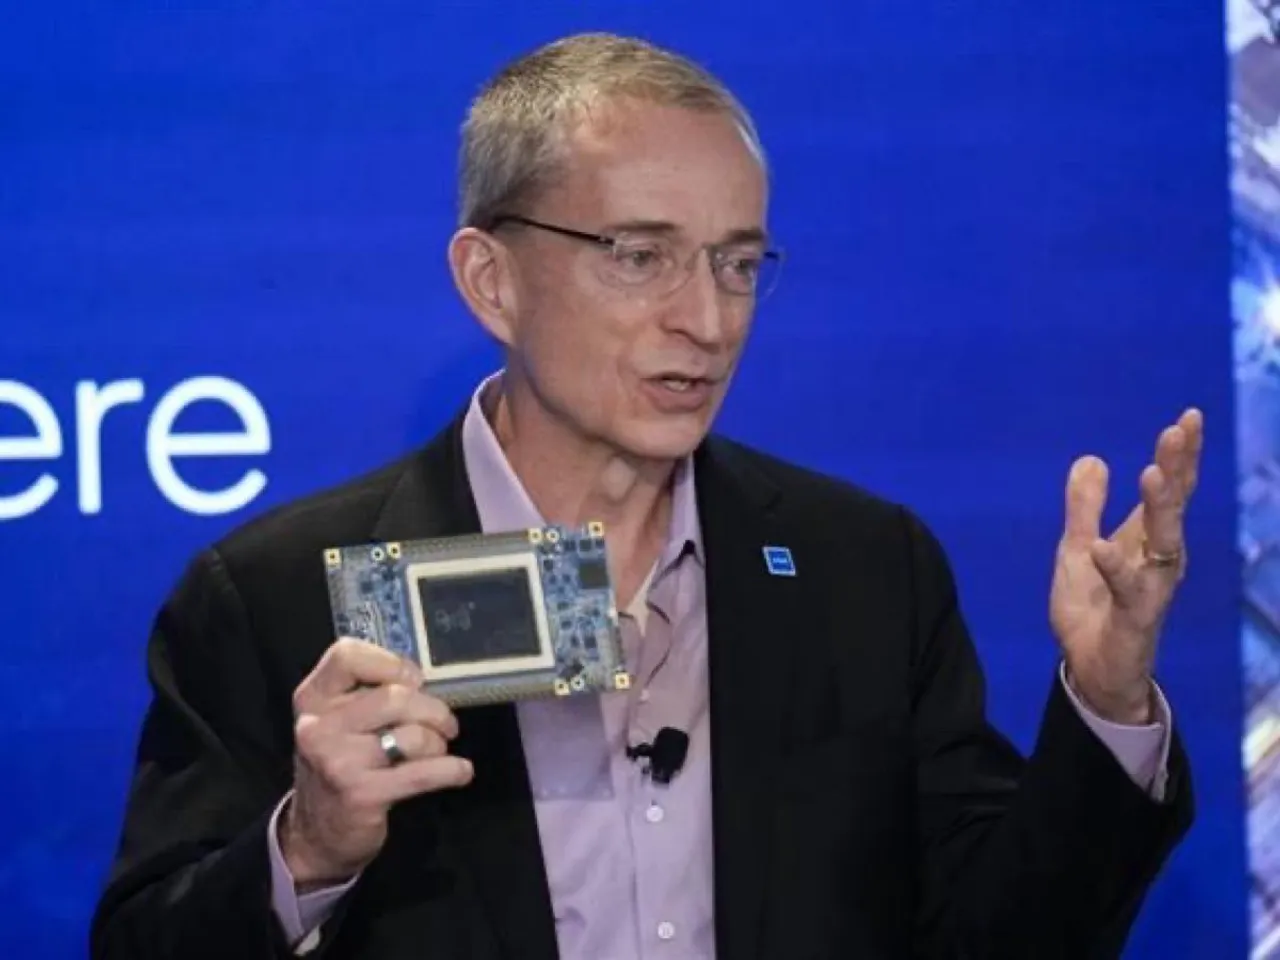 Patrick Gelsinger, CEO of Intel